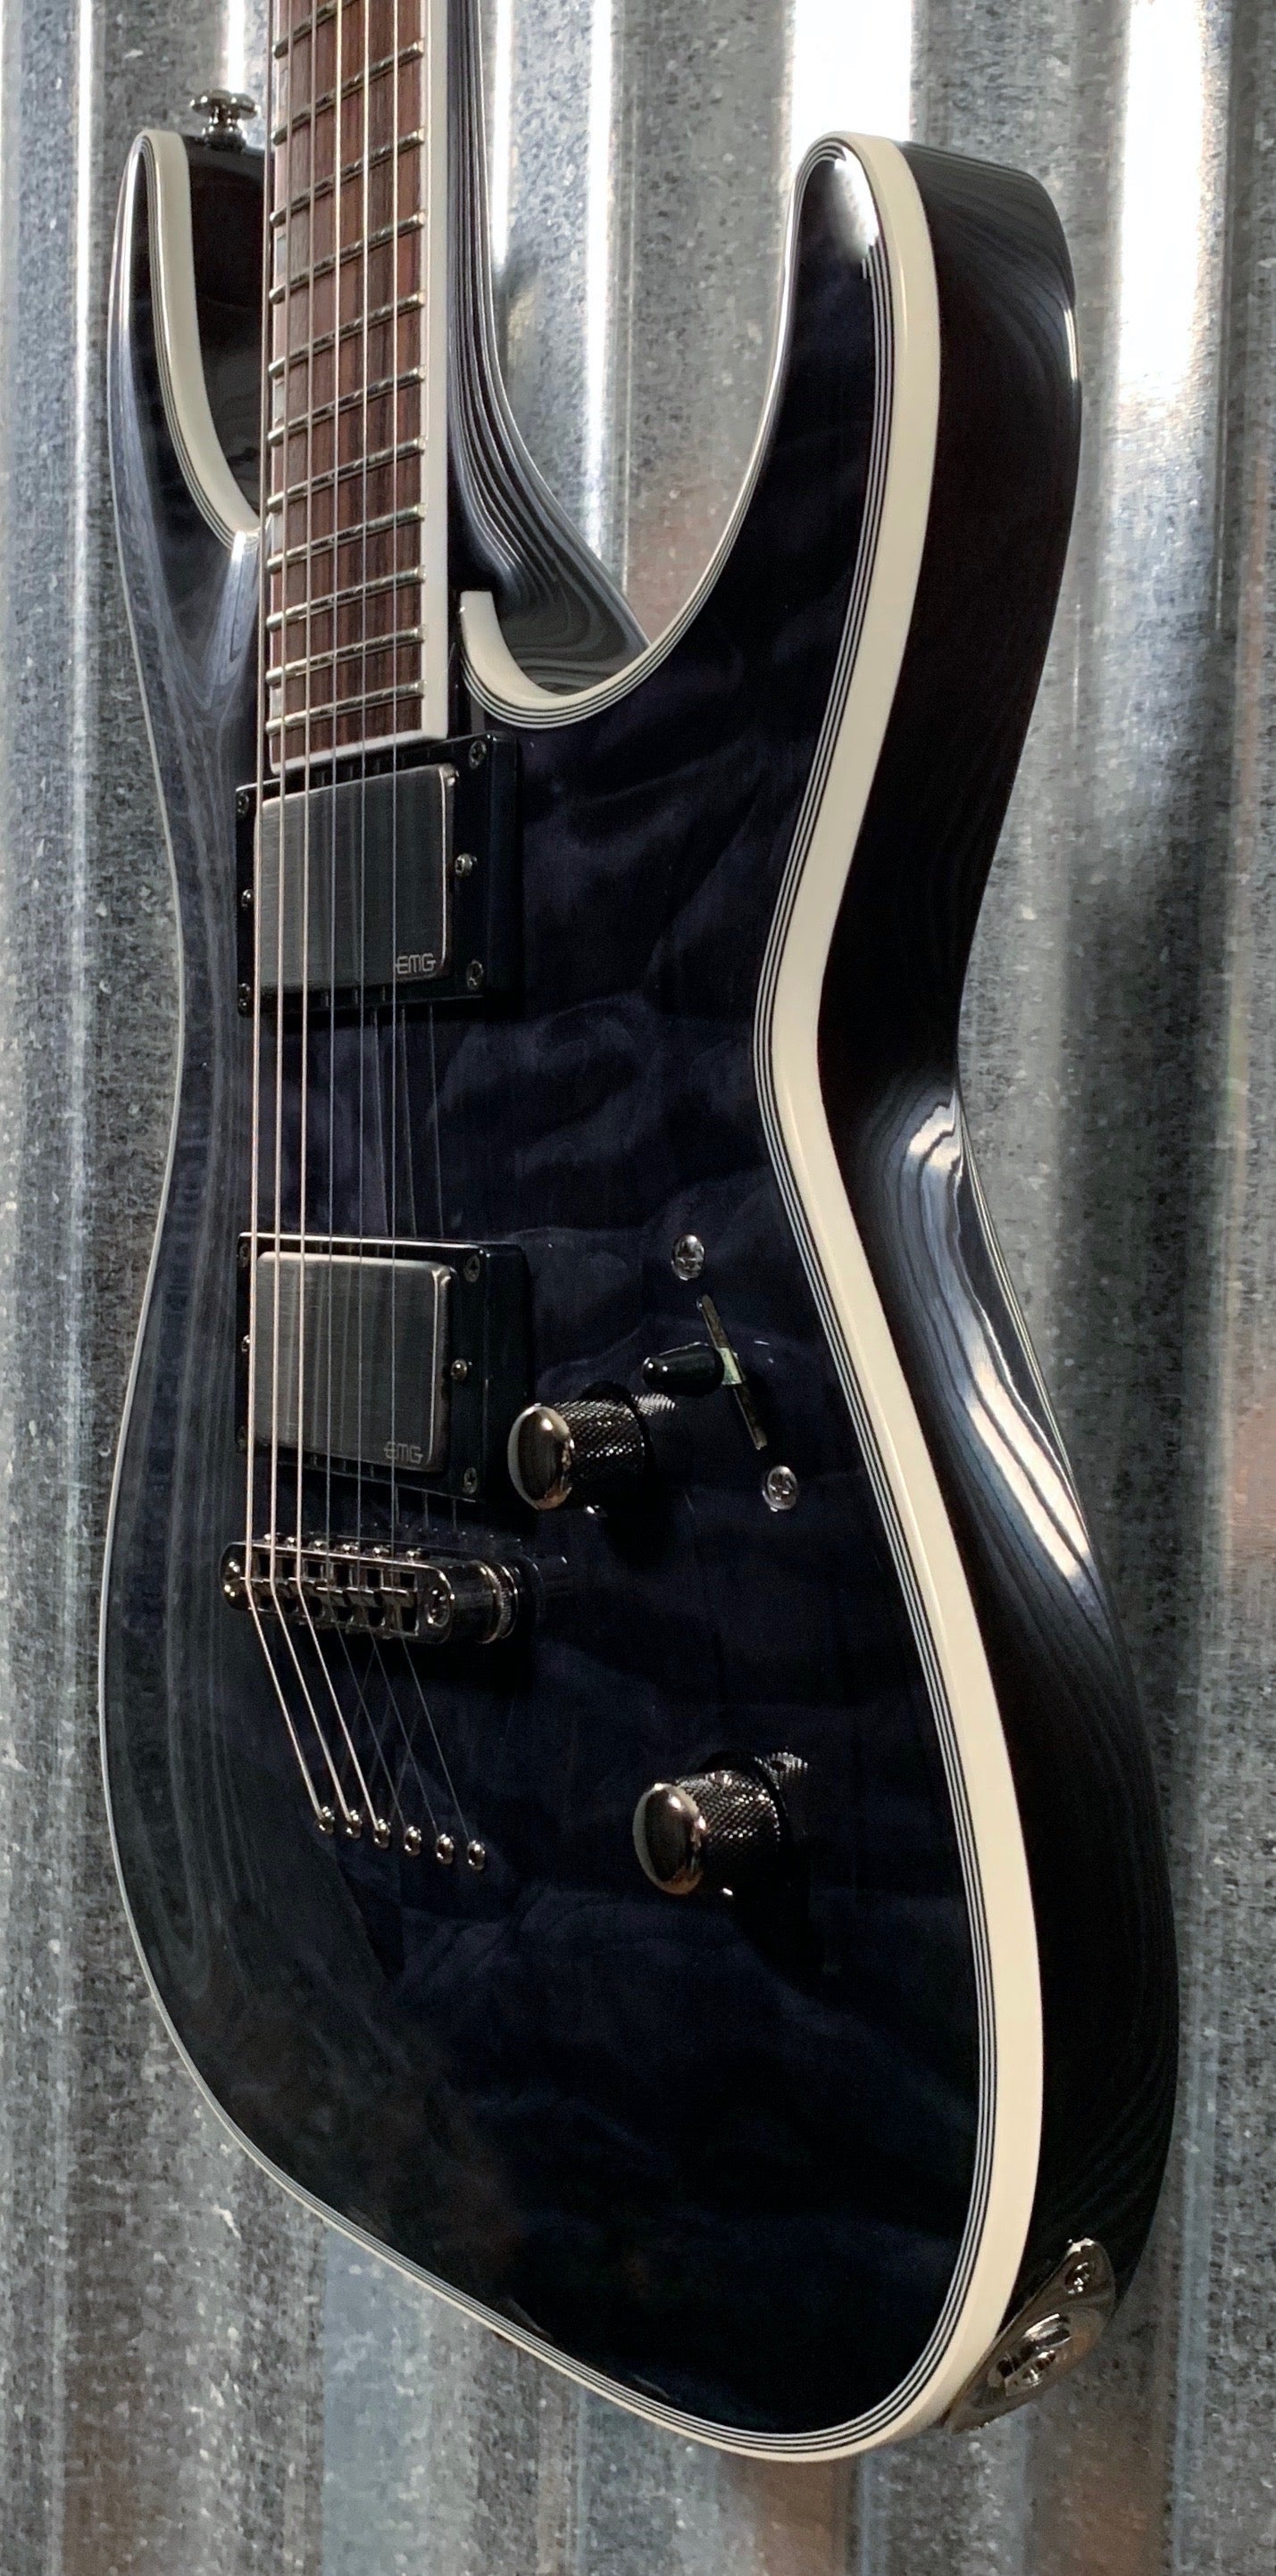 ESP LTD MH-1001NT See Thru Black EMG Guitar & Bag LMH1001NTSTBLK #1256 Demo